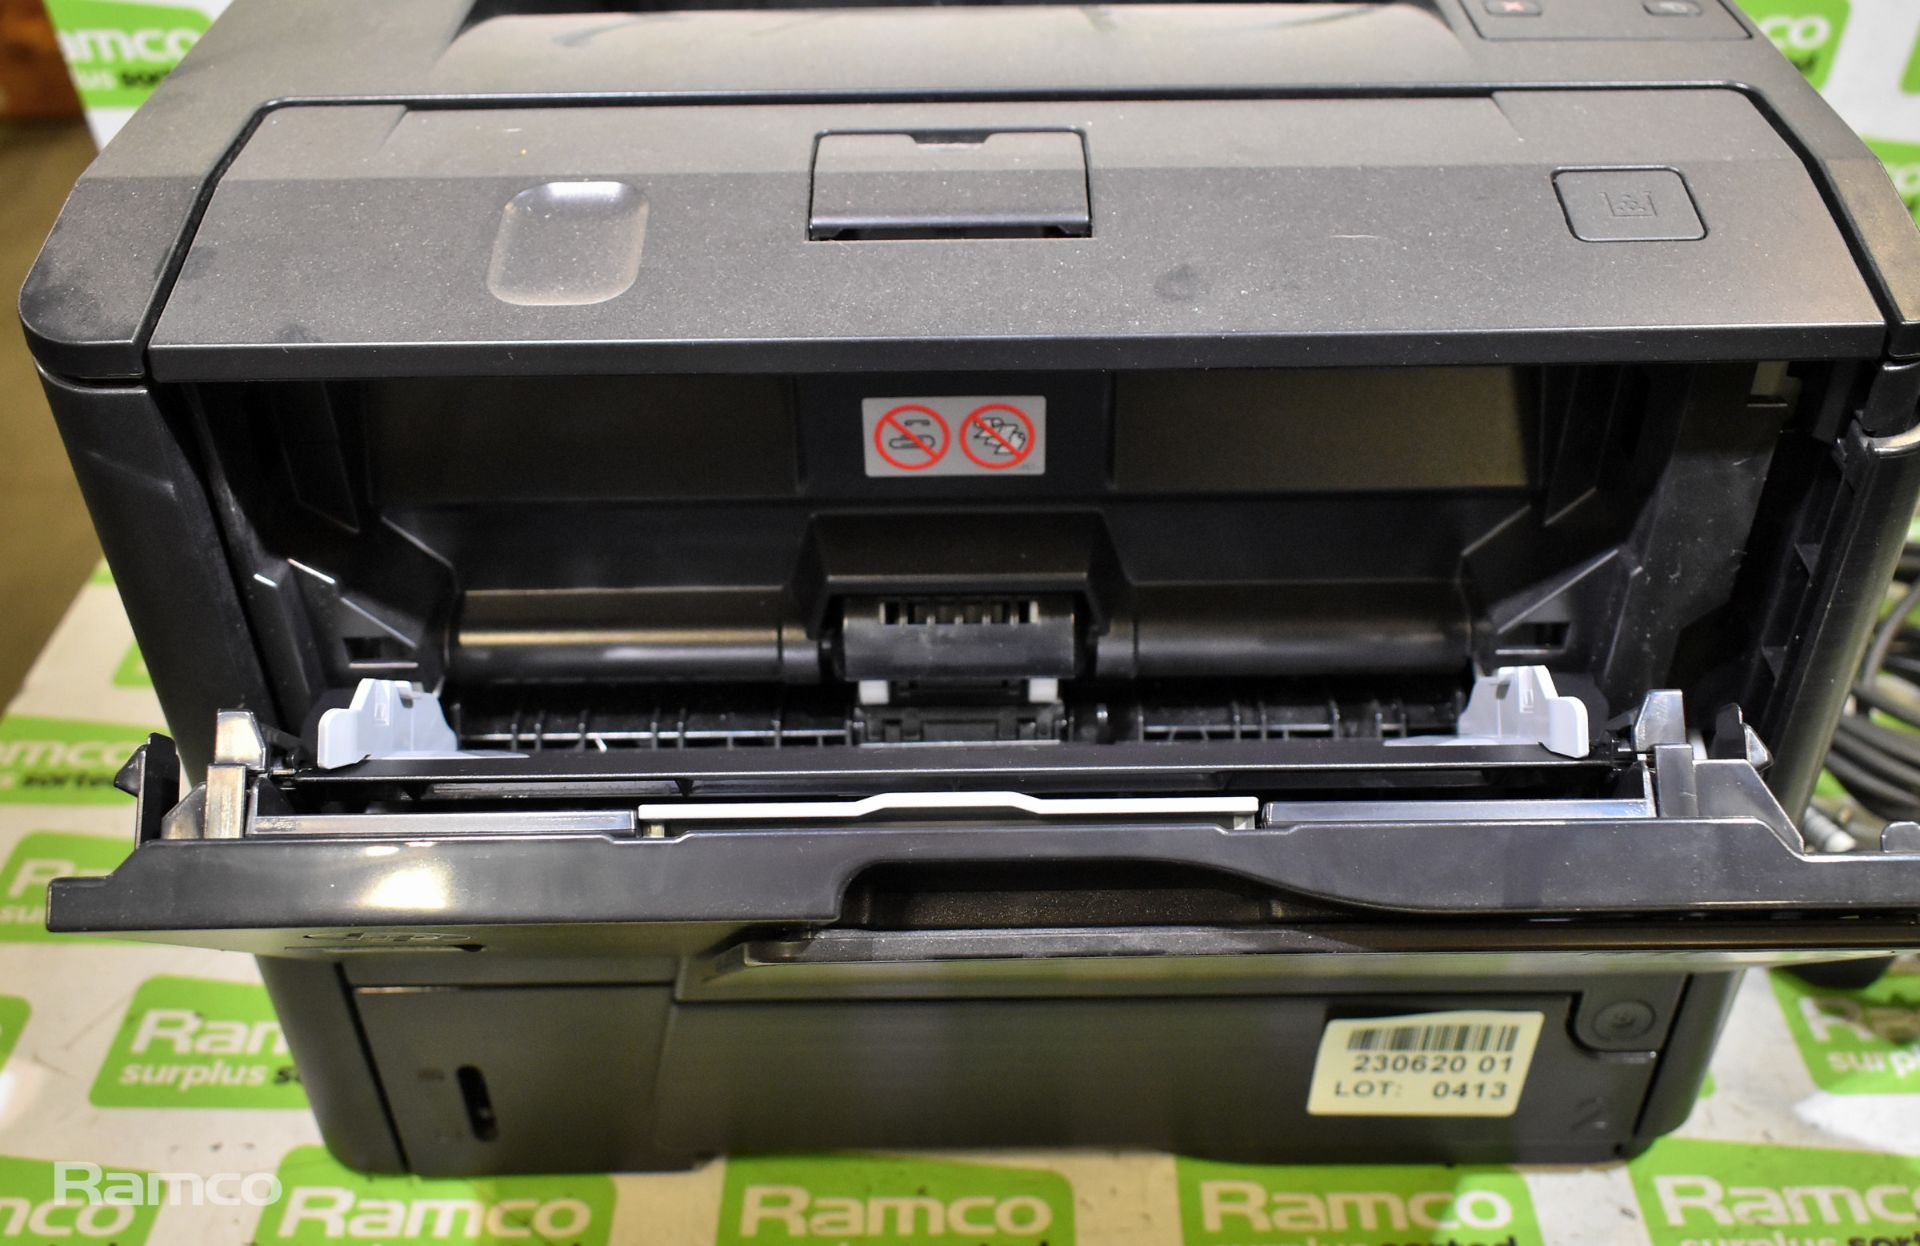 Hewlett-Packard M401A - Laserjet Pro 400 printer - USB & power cord included - Bild 2 aus 6